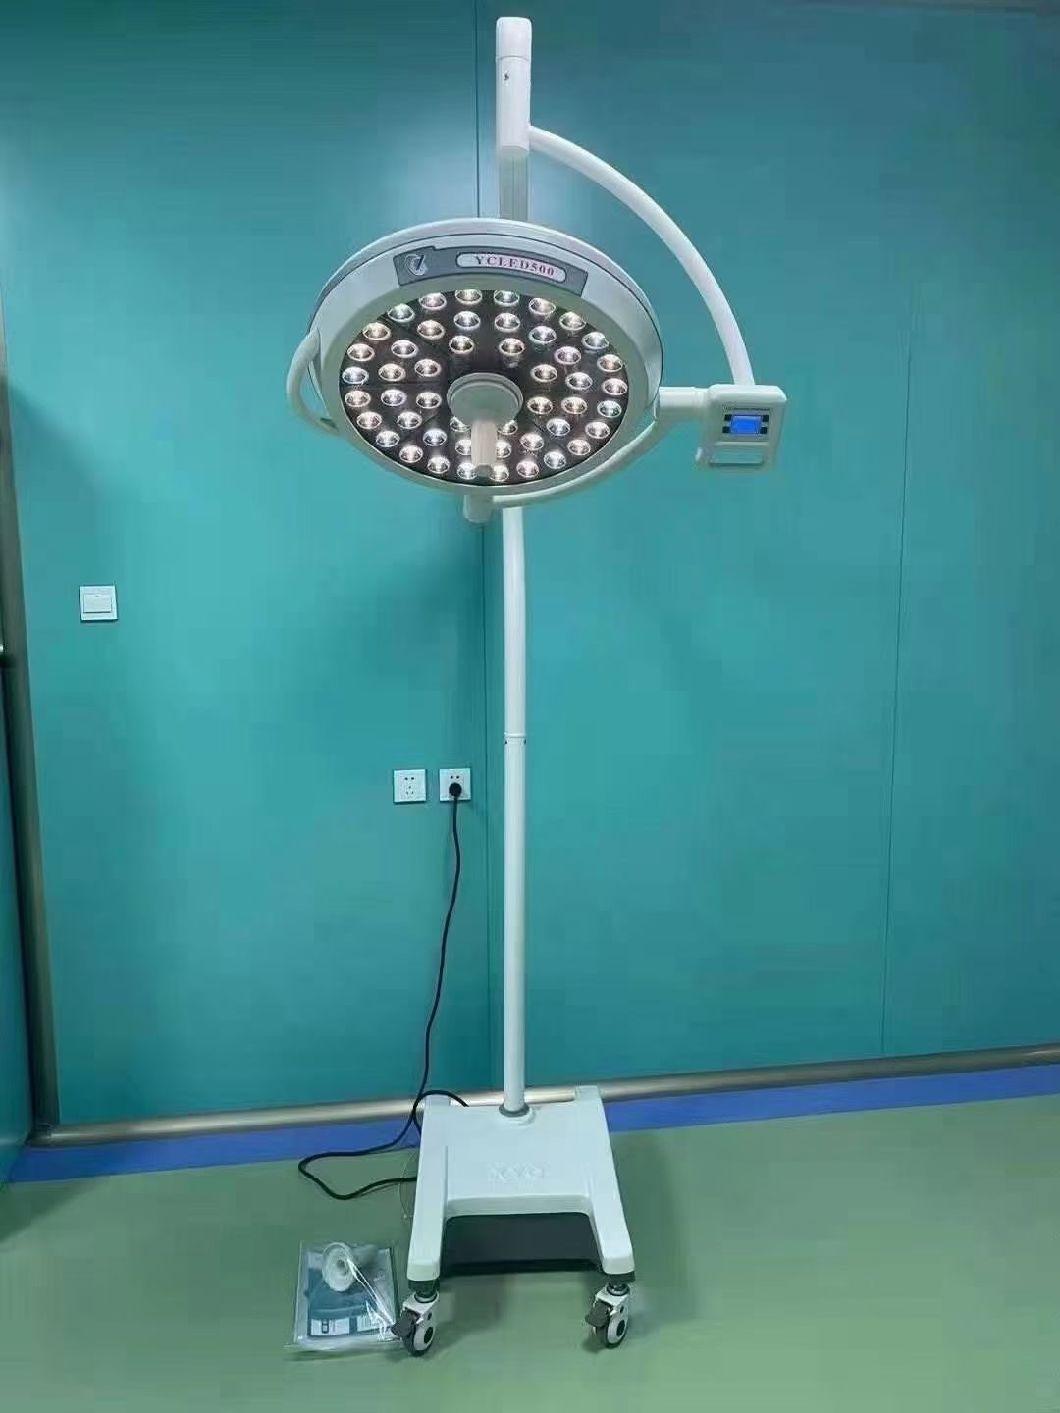 Head Optional LED Ceiling Light Head Halogen Lamp Operation Theatre Light Forhospital Operating Room Use